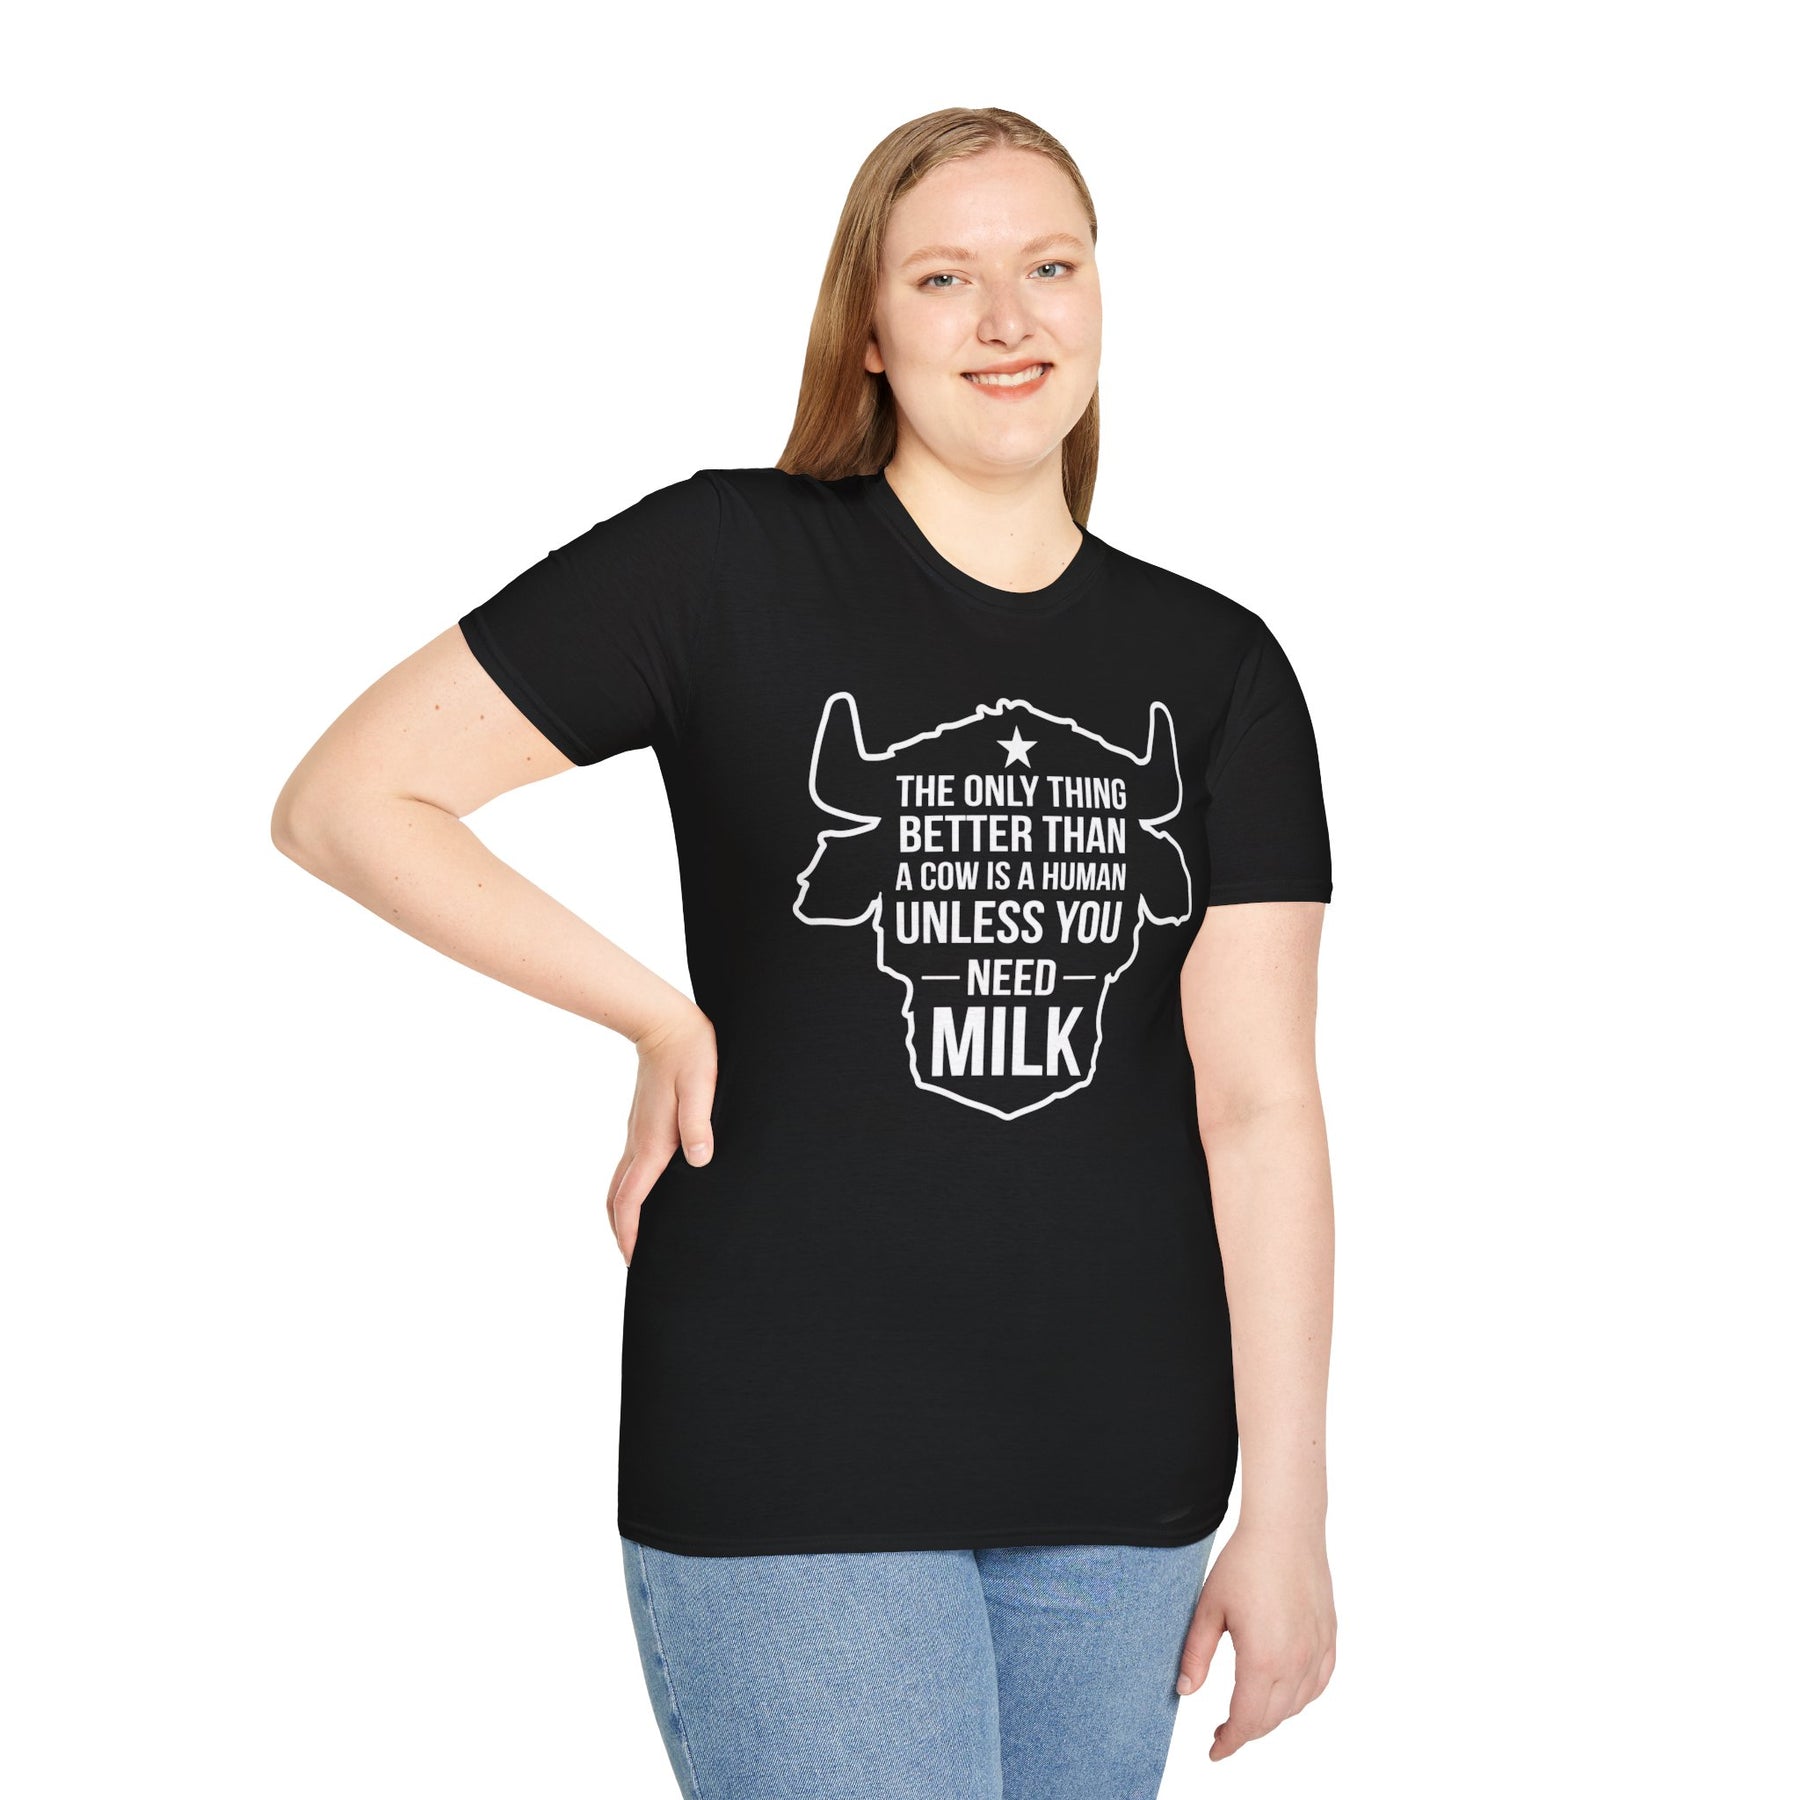 Cow Lover T-shirt / Cow Addict T-shirt